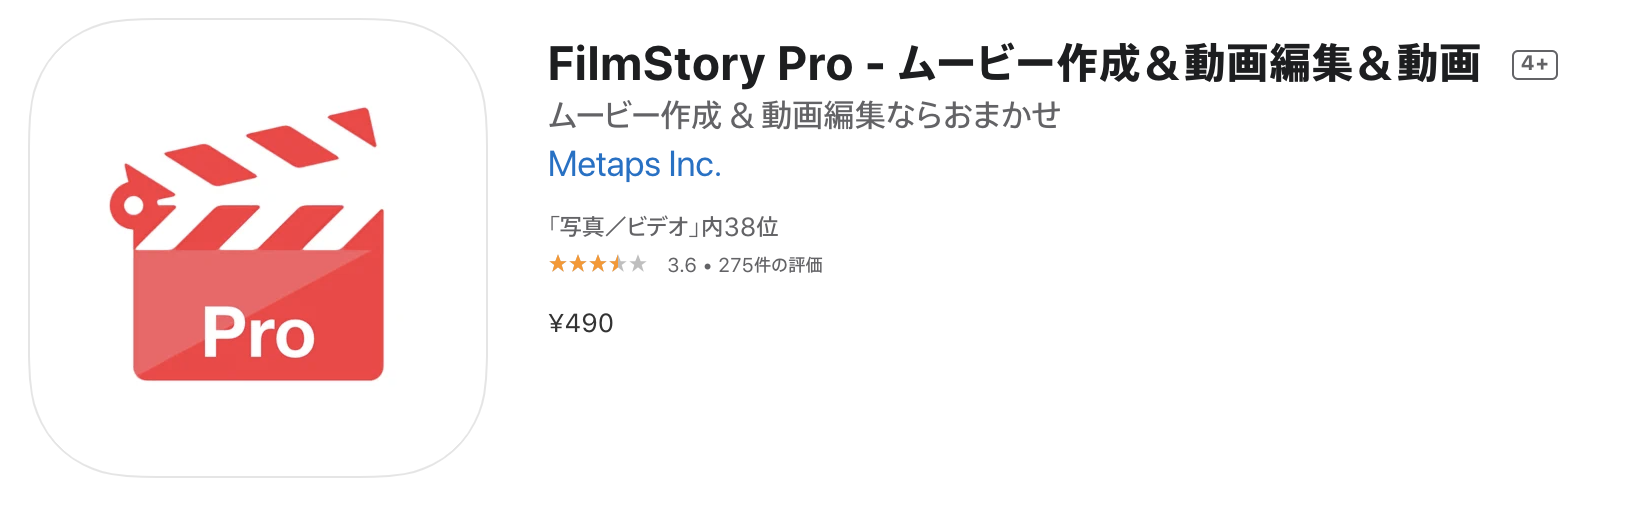 FilmStory Pro